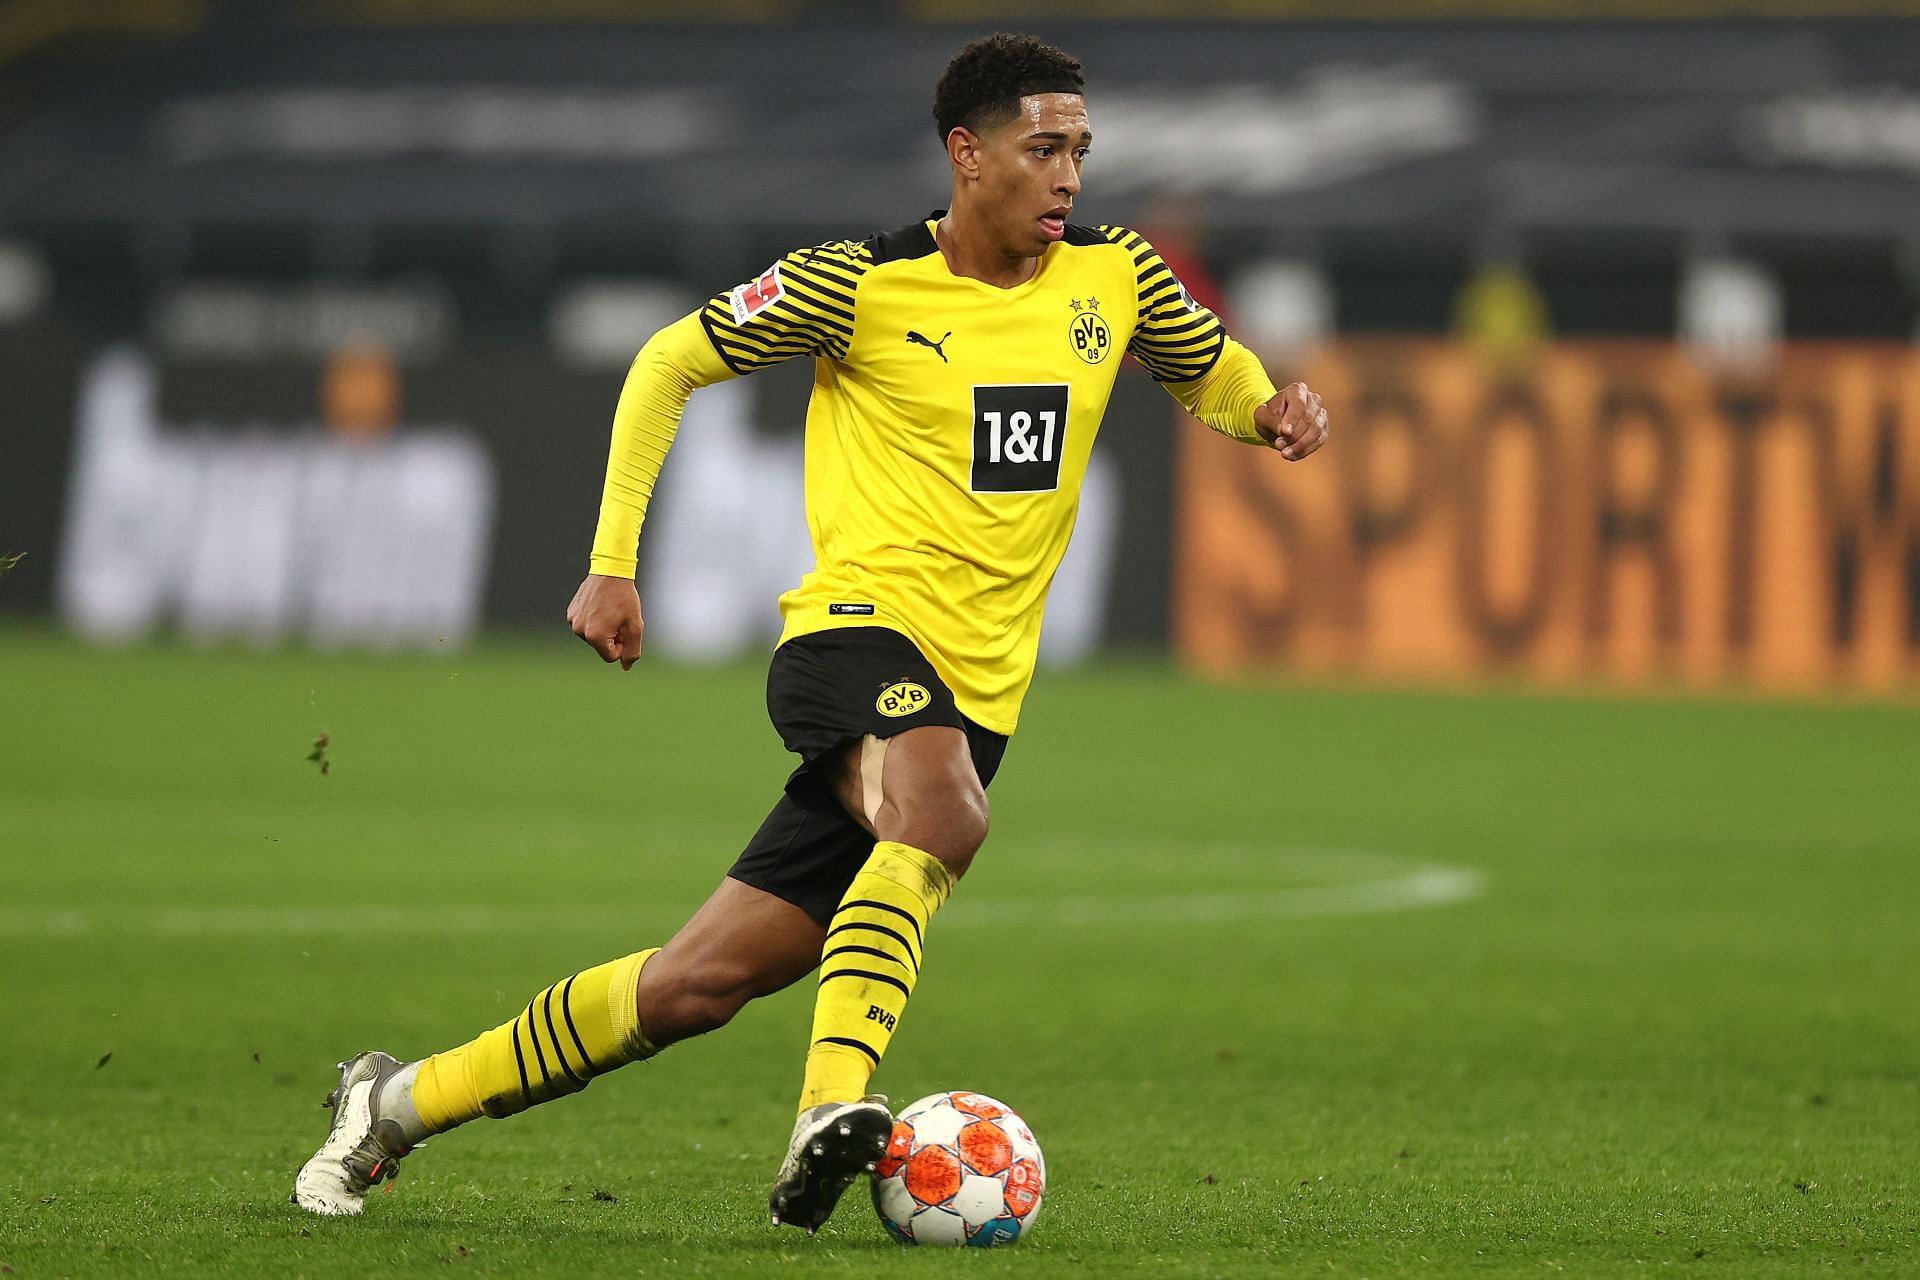 Borussia Dortmund play Eintracht Frankfurt on Saturday